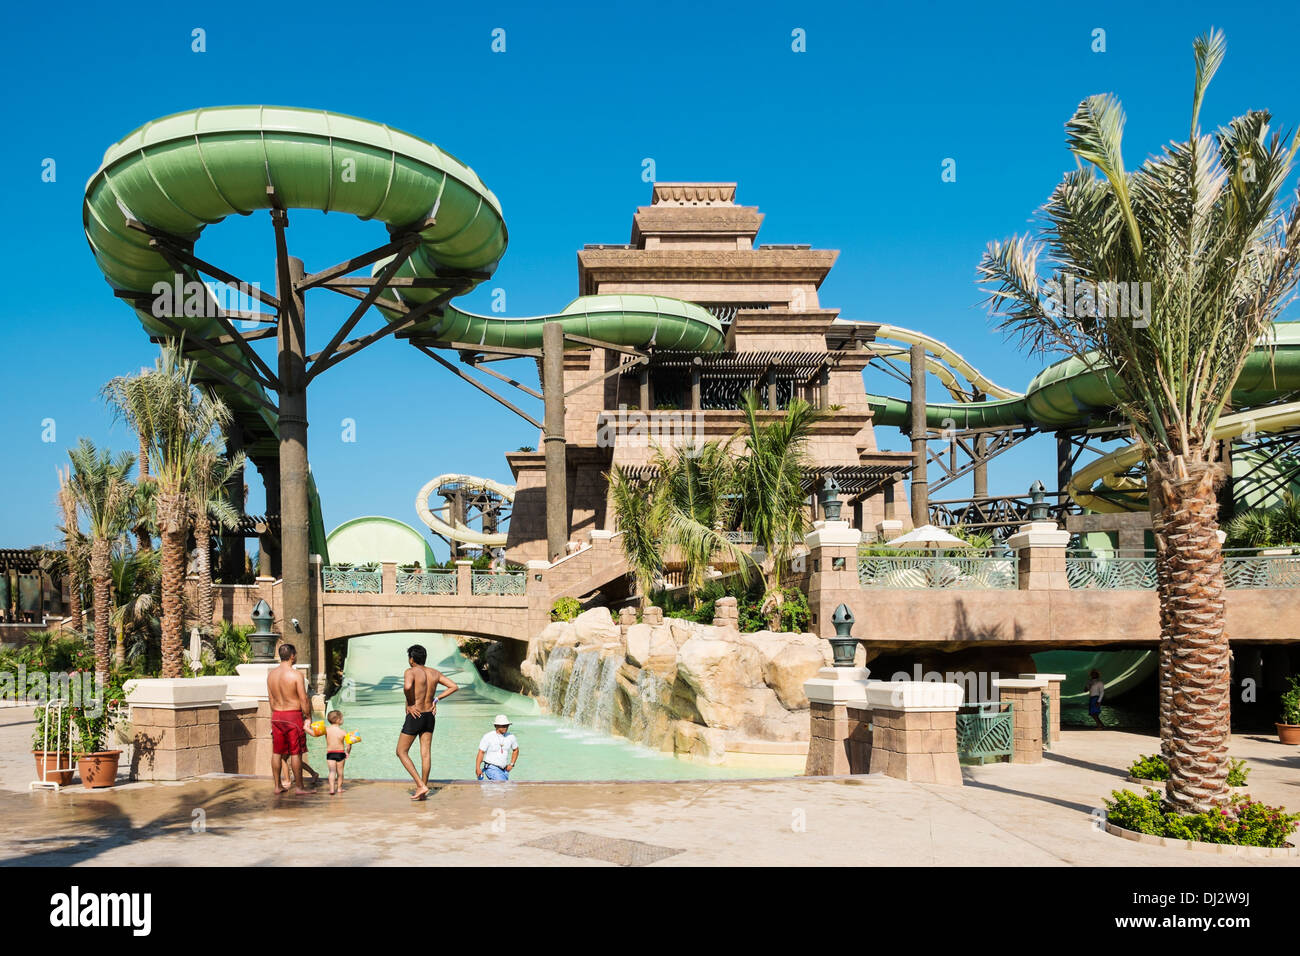 The new Tower of Poseidon at Aquaventure water park at the Atlantis Hotel on The Palm island Dubai Stock Photo